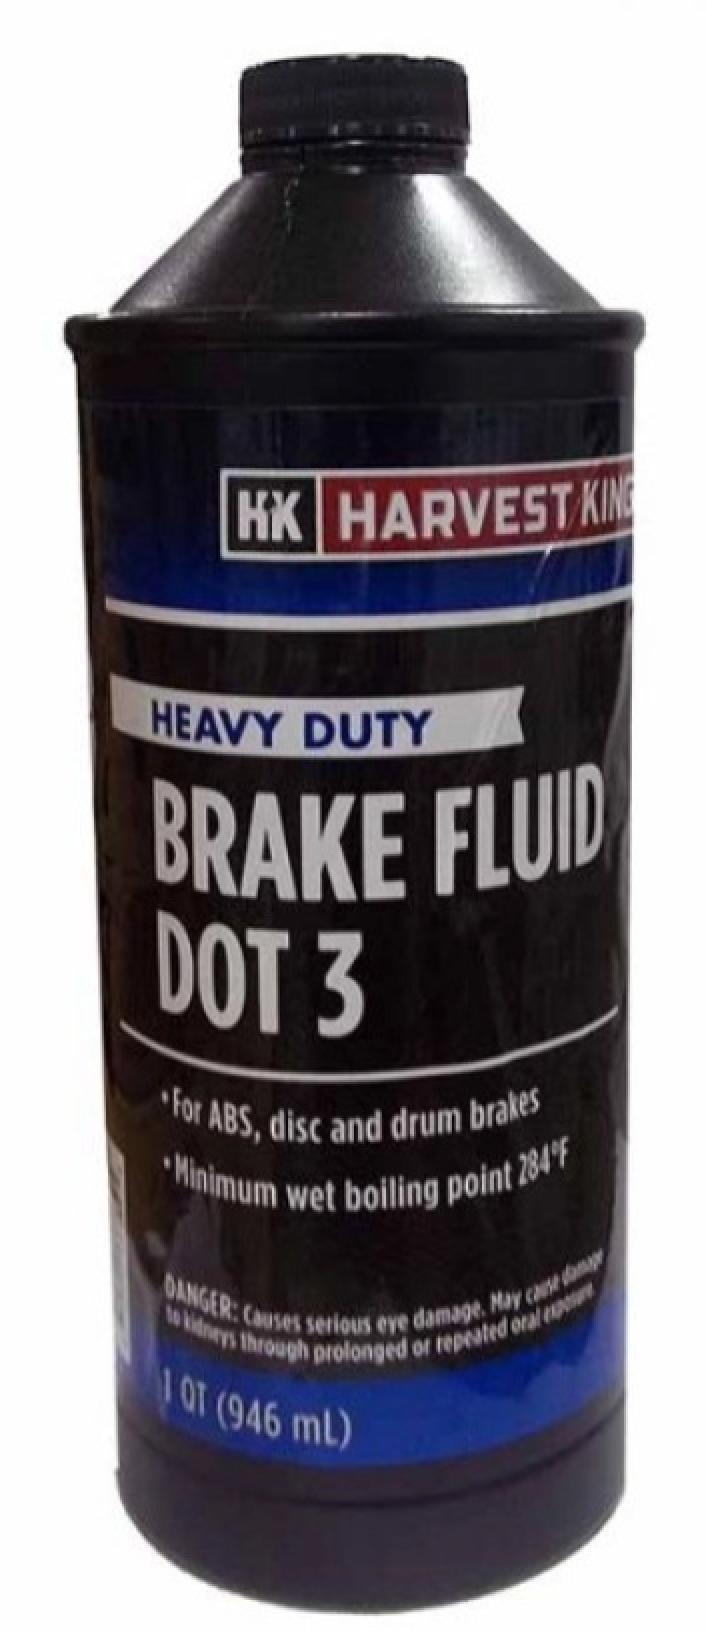 Harvest King Heavy Duty DOT 3 Brake Fluid